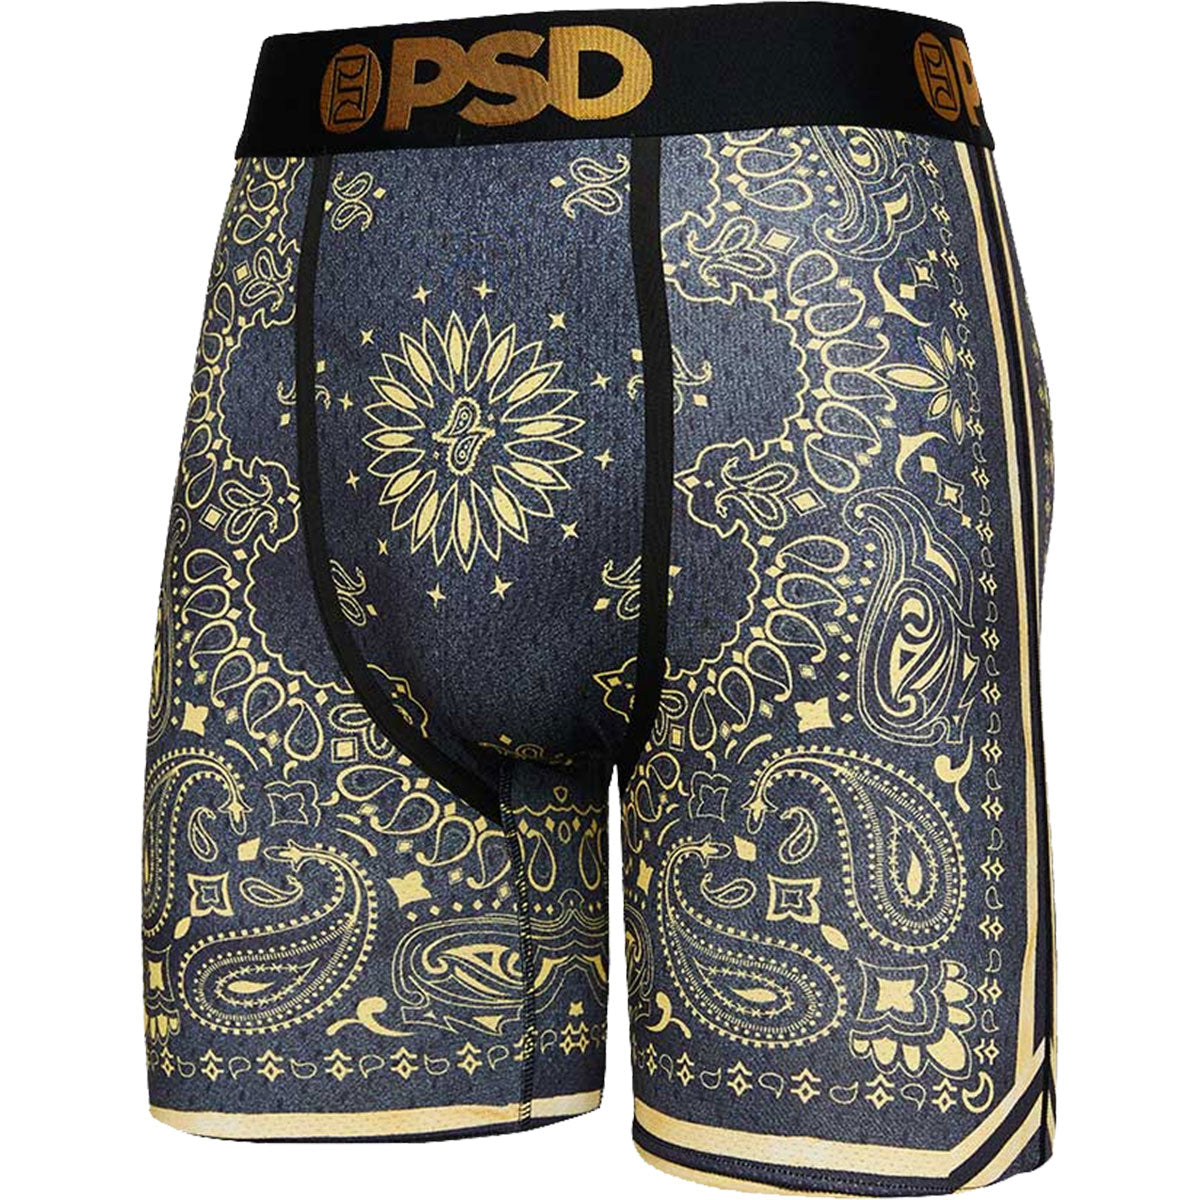 PSD Bandana Roses Sports Bra Women's Top Underwear (Brand New